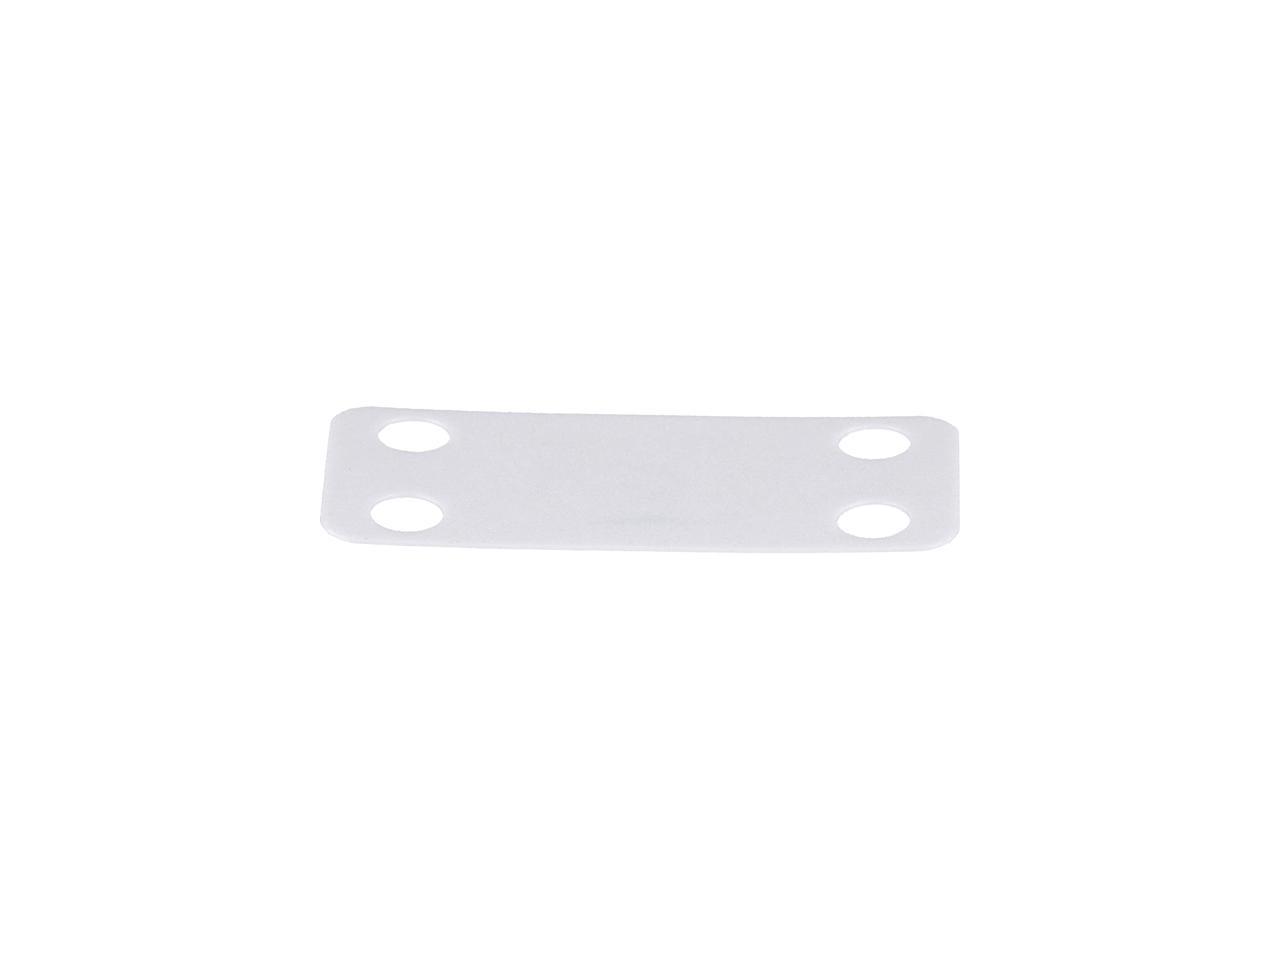 PANDUIT Harness Identification Marker Plate - Newegg.com